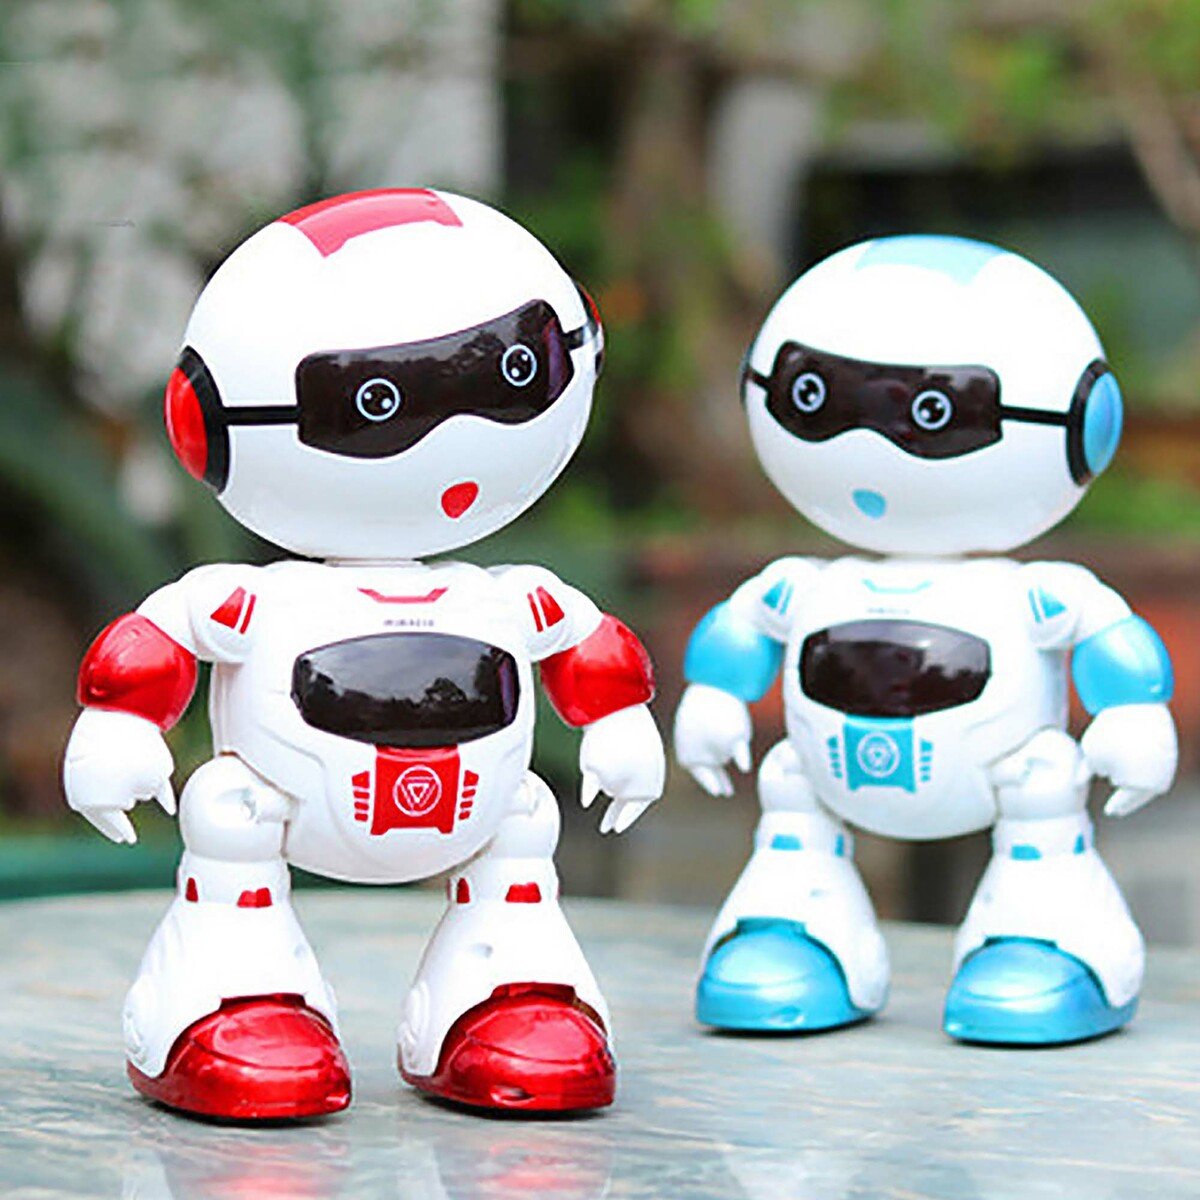 Lezhou Remote control Dancing Smart Robot 99333-2 Assorted